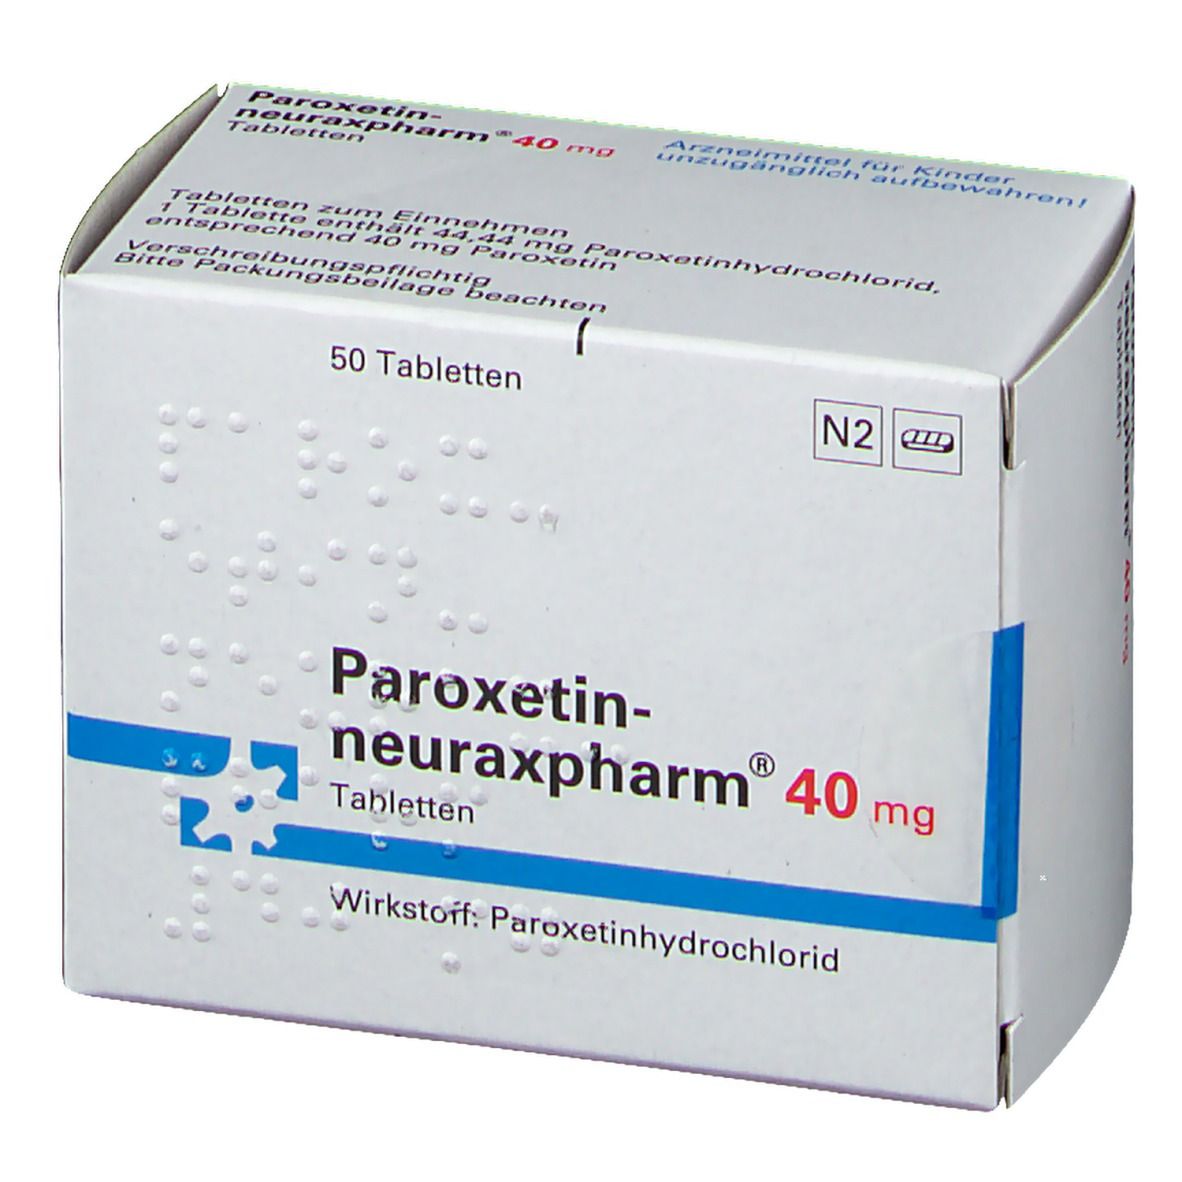 Paroxetin-neuraxpharm® 40 mg